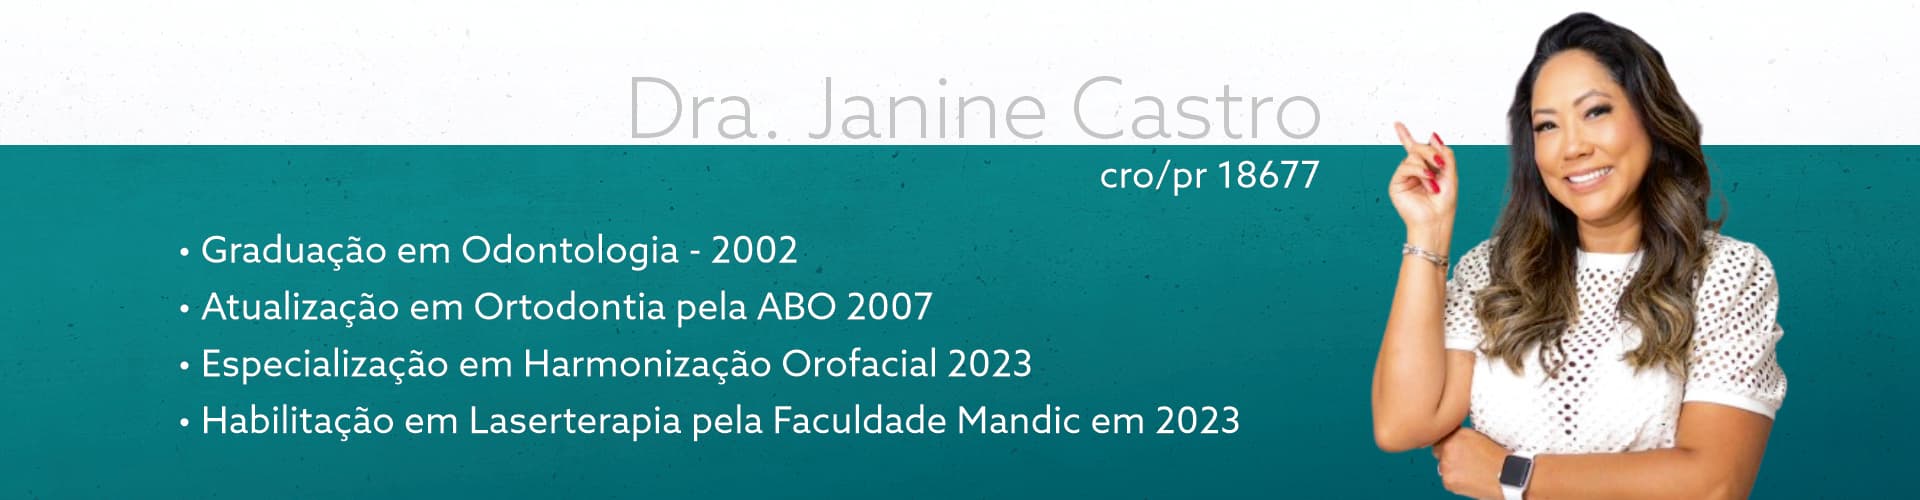 Slide Dra Janine Castro